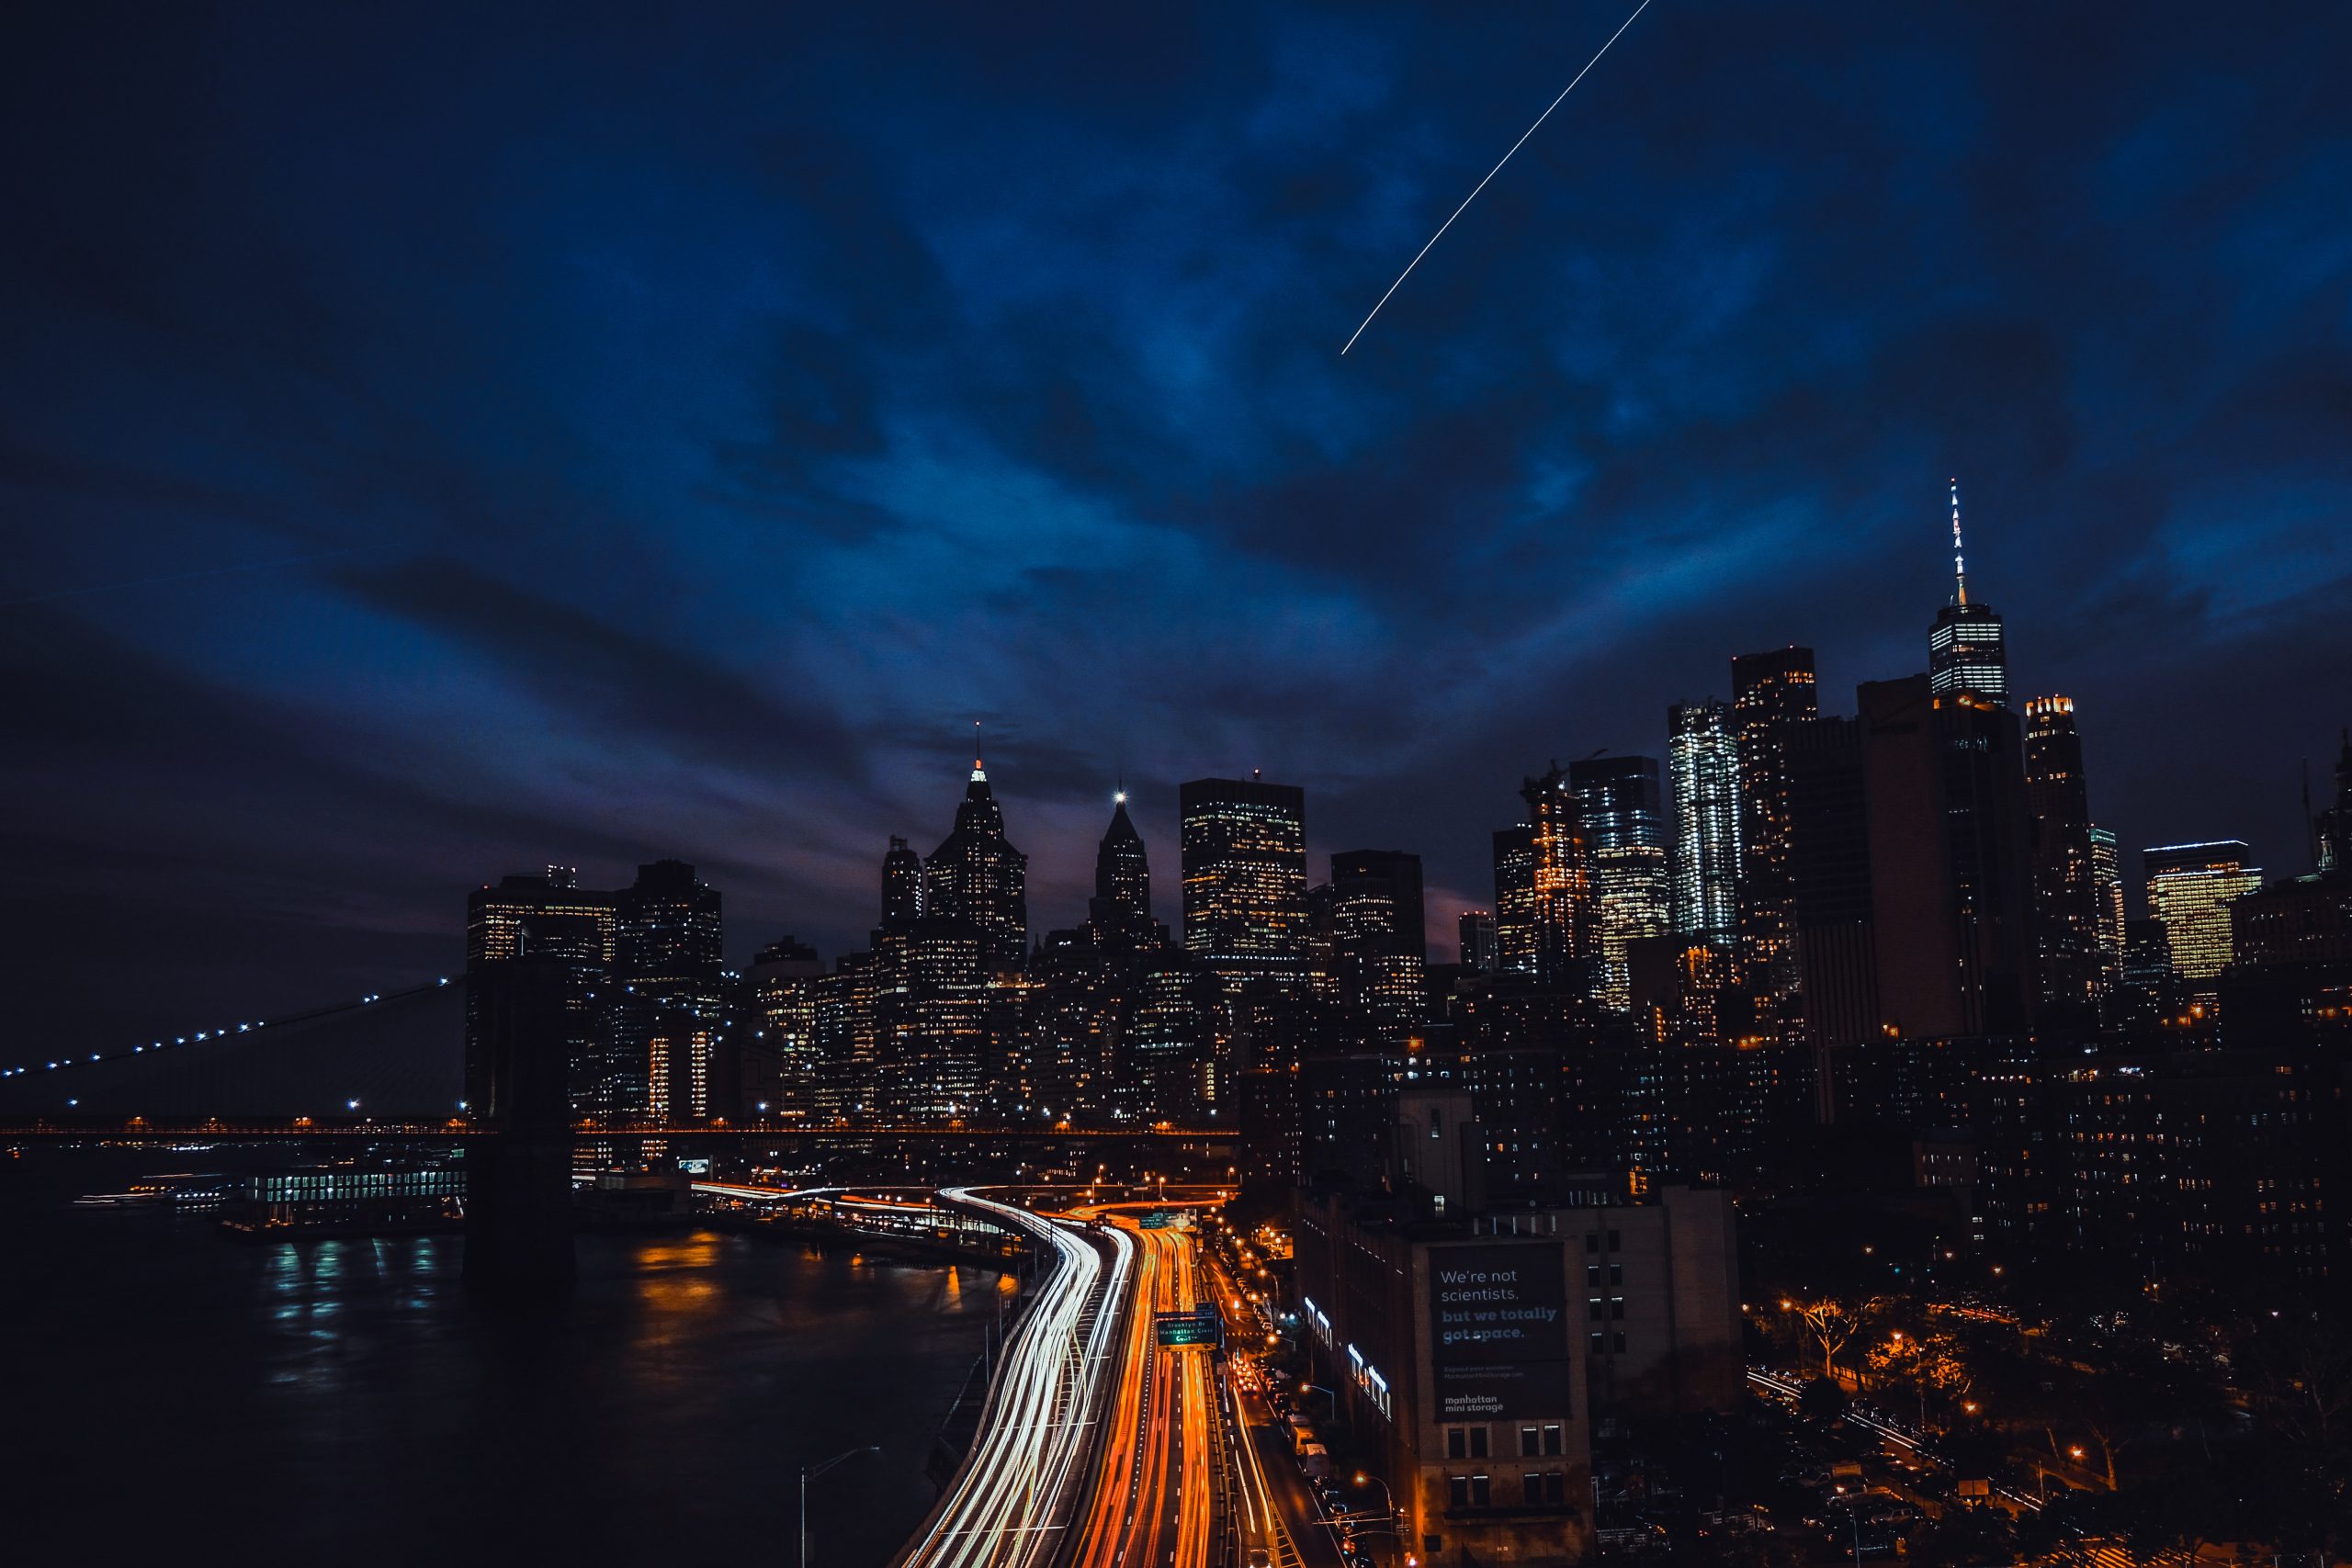 Night Life Photography – City